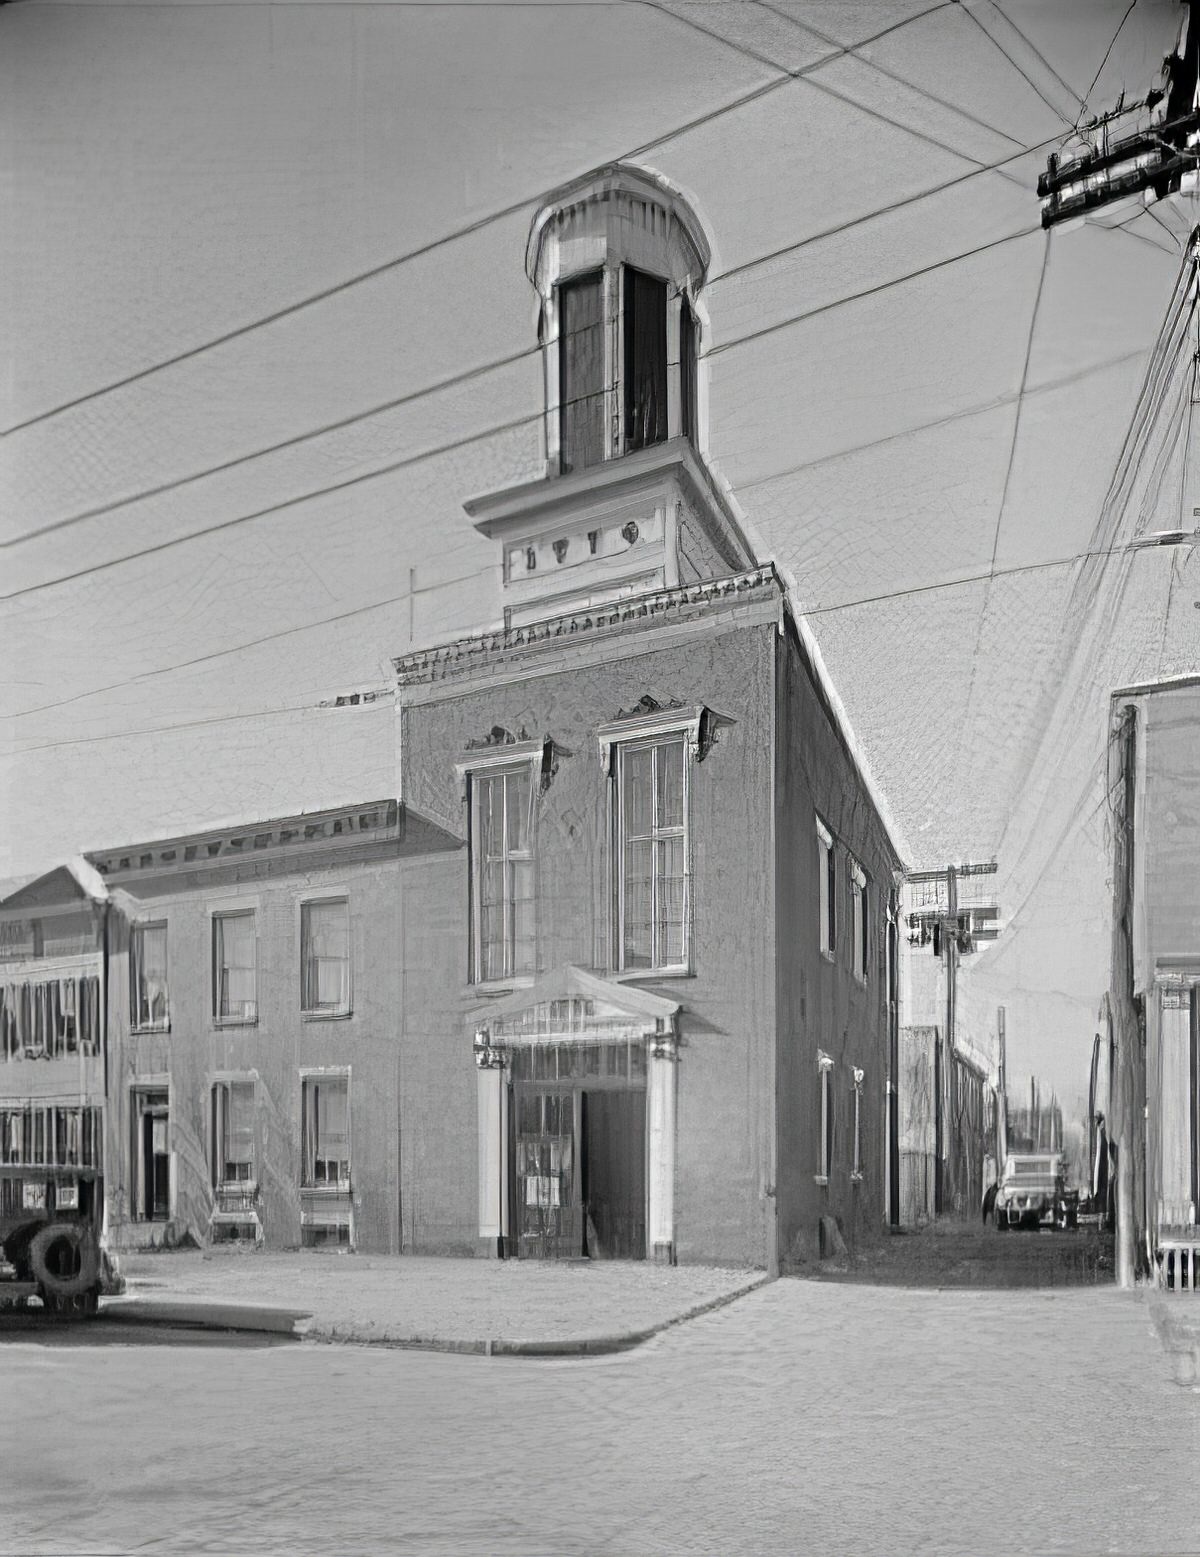 Firehouse in Alexandria, Virginia, 1920s